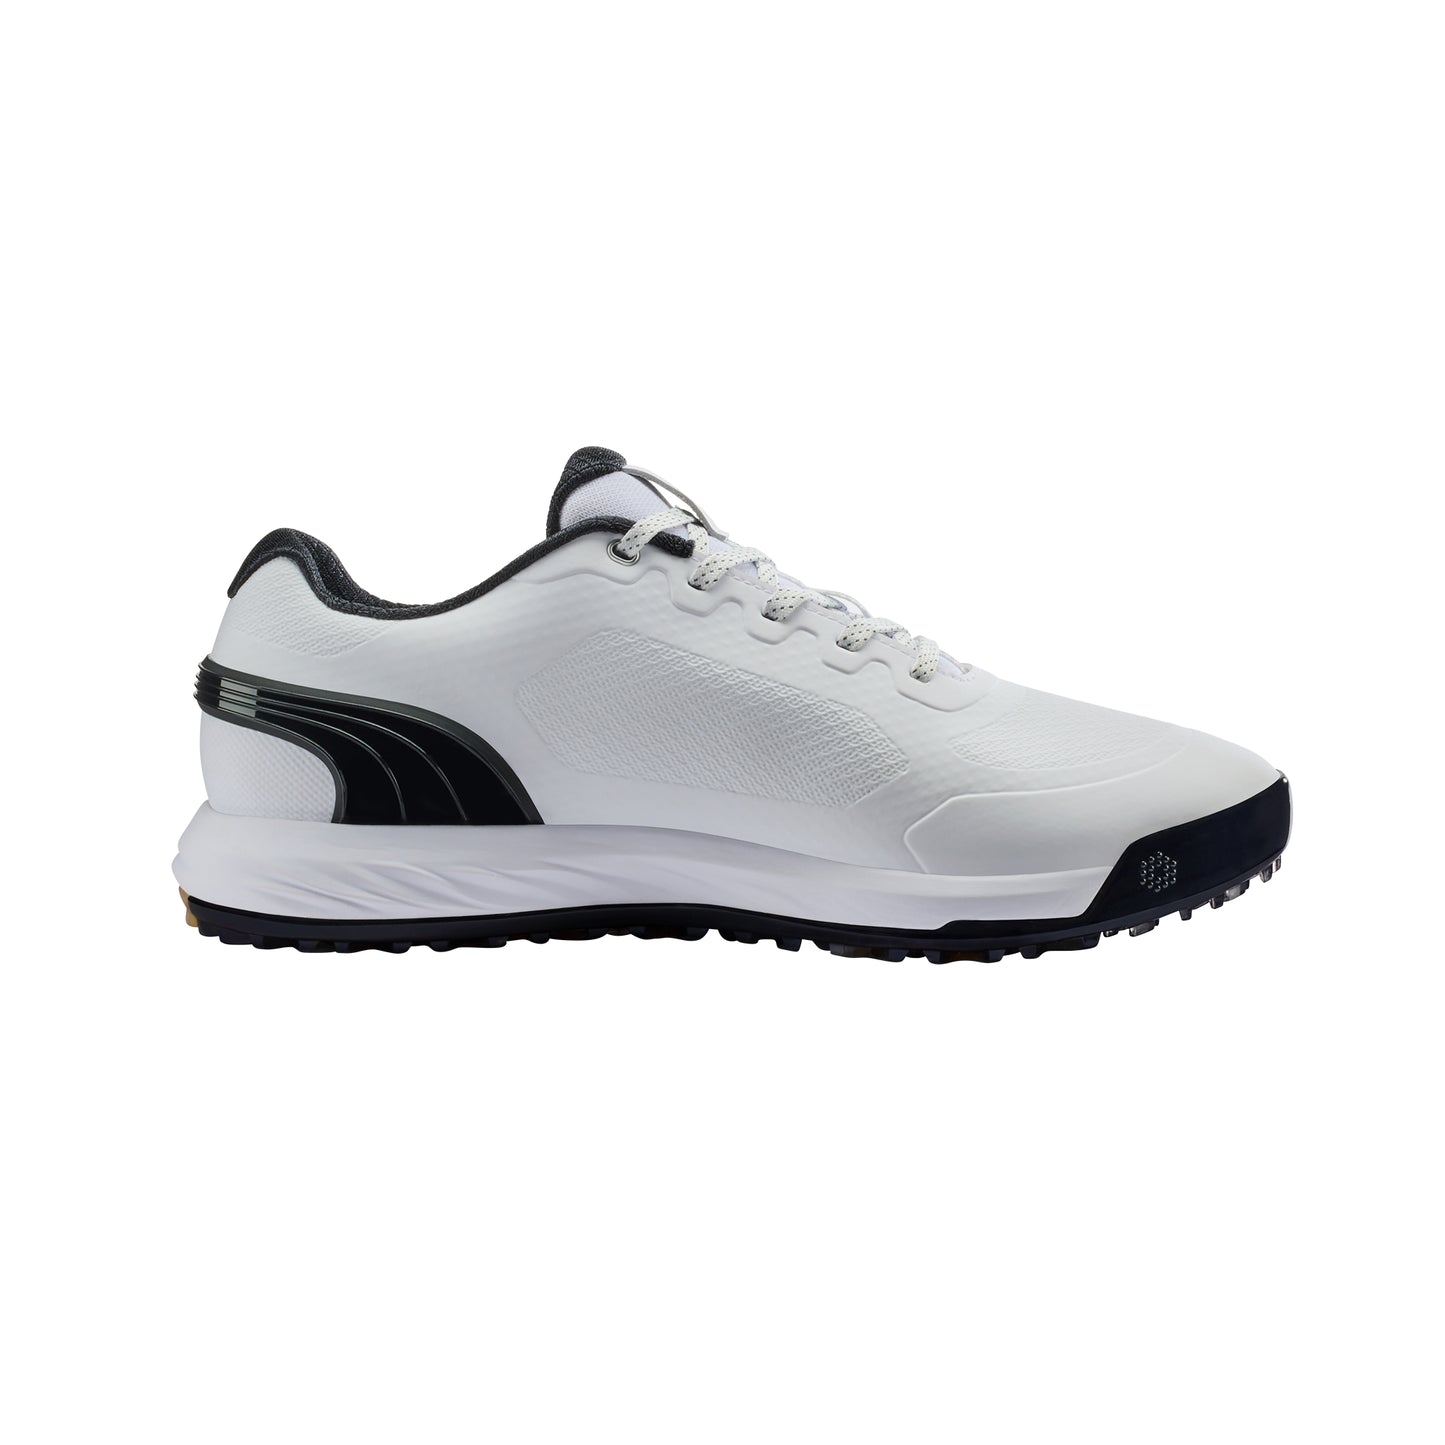 Puma Men's Alphacat Nitro Spikeless Golf Shoes - White/Black/Gum